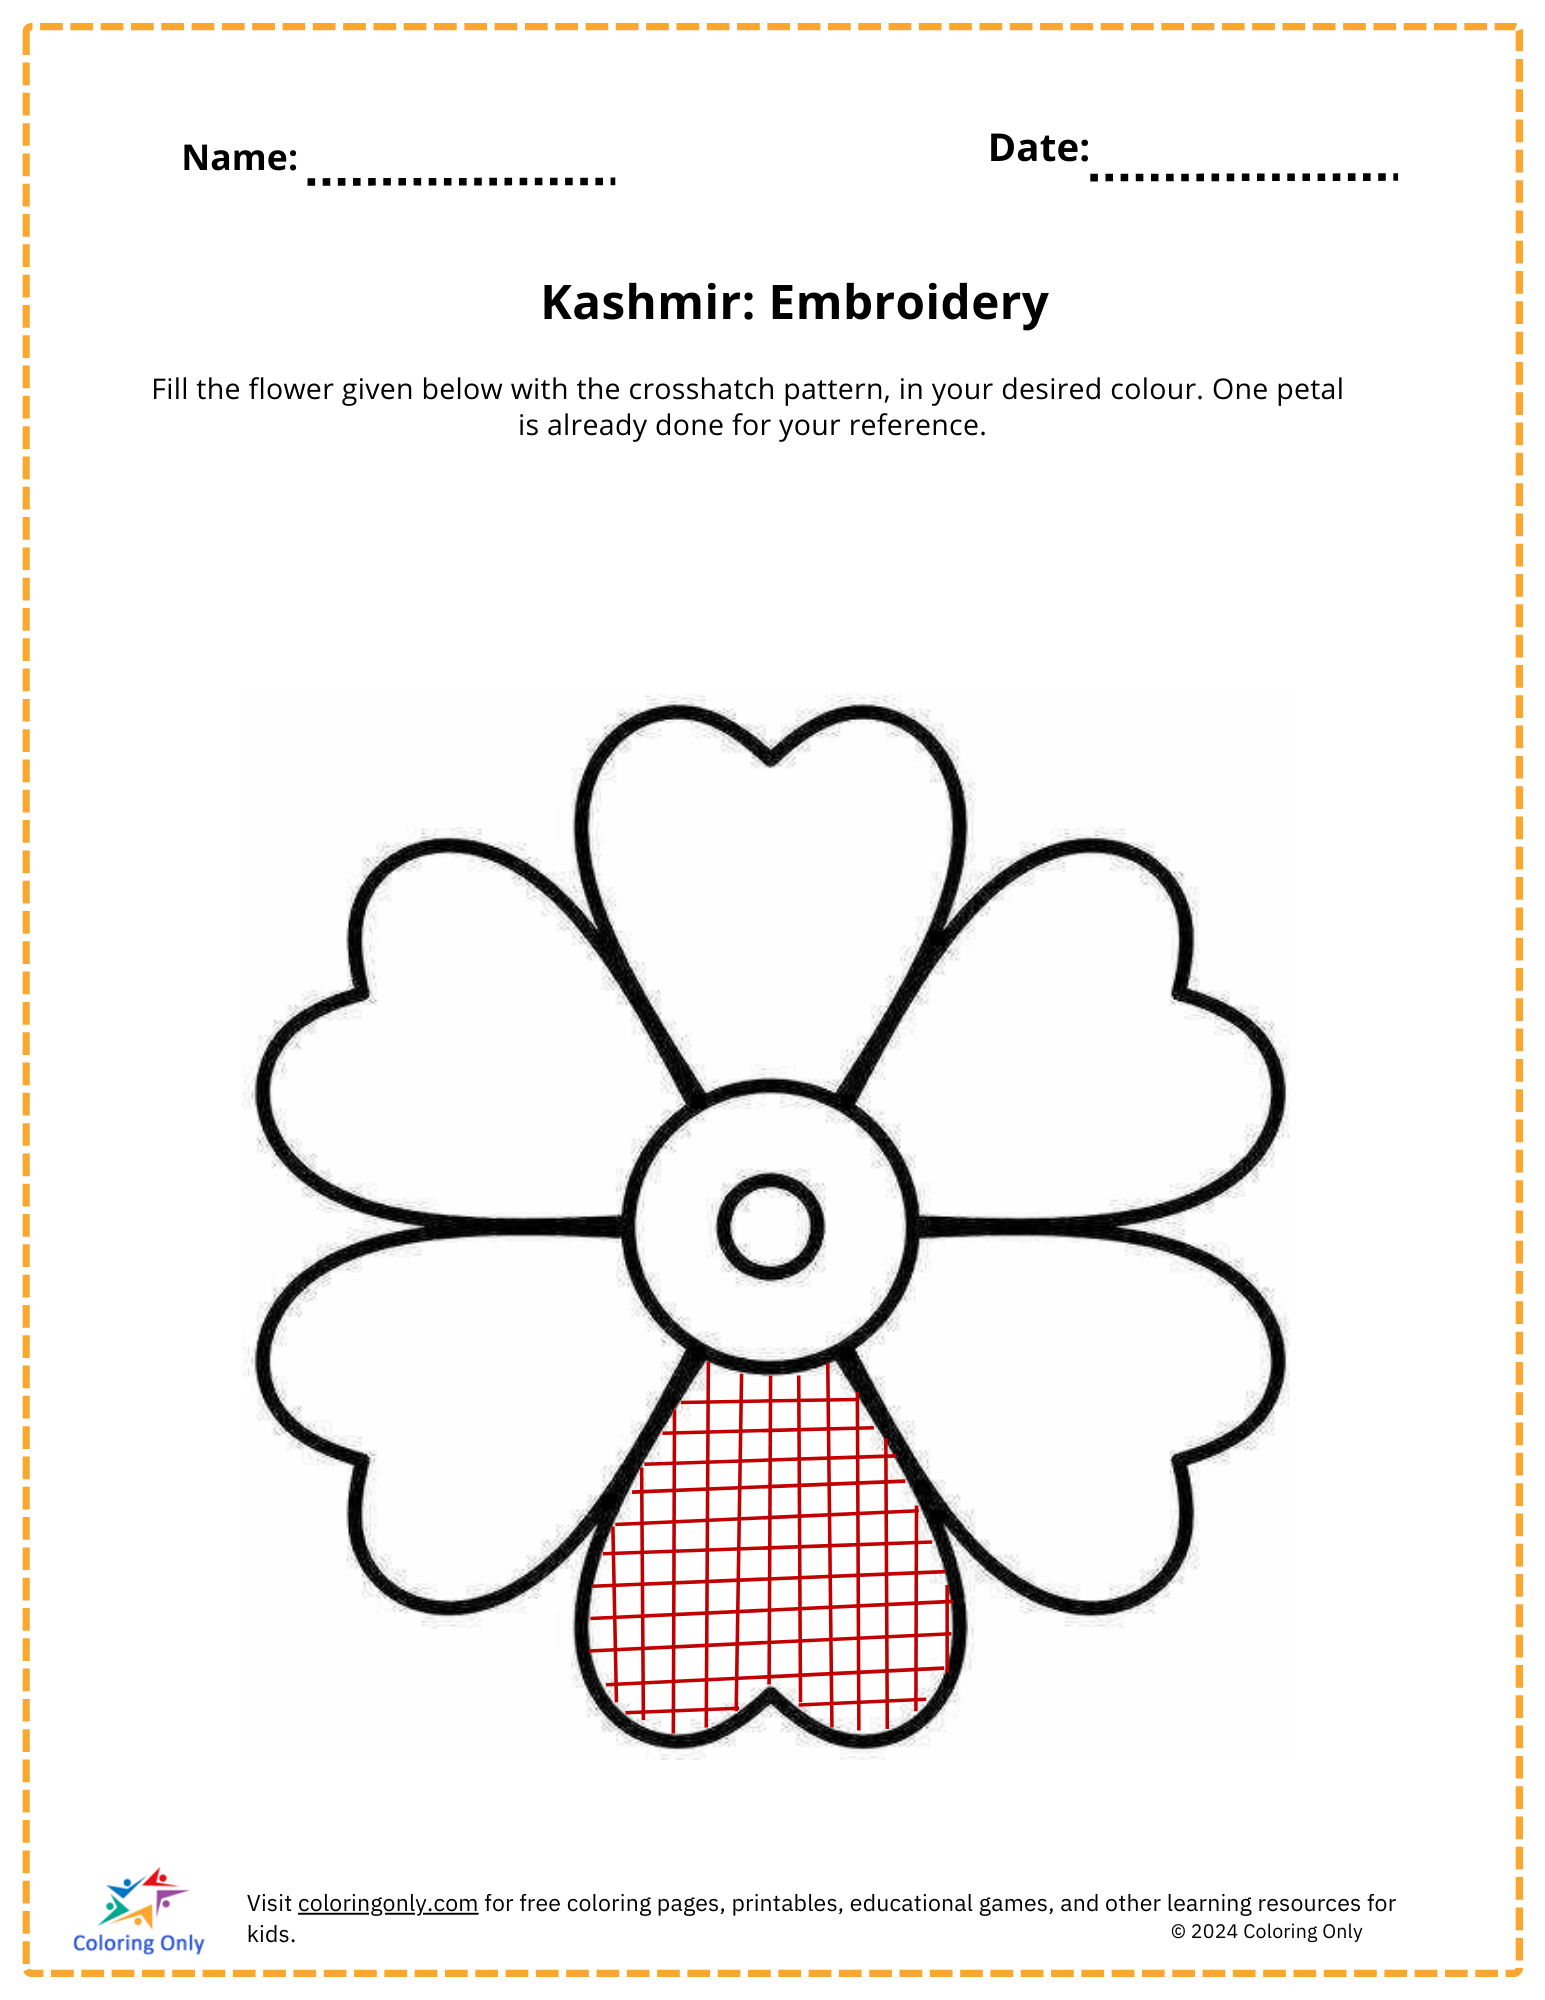 Kashmir: Embroidery Free Printable Worksheet